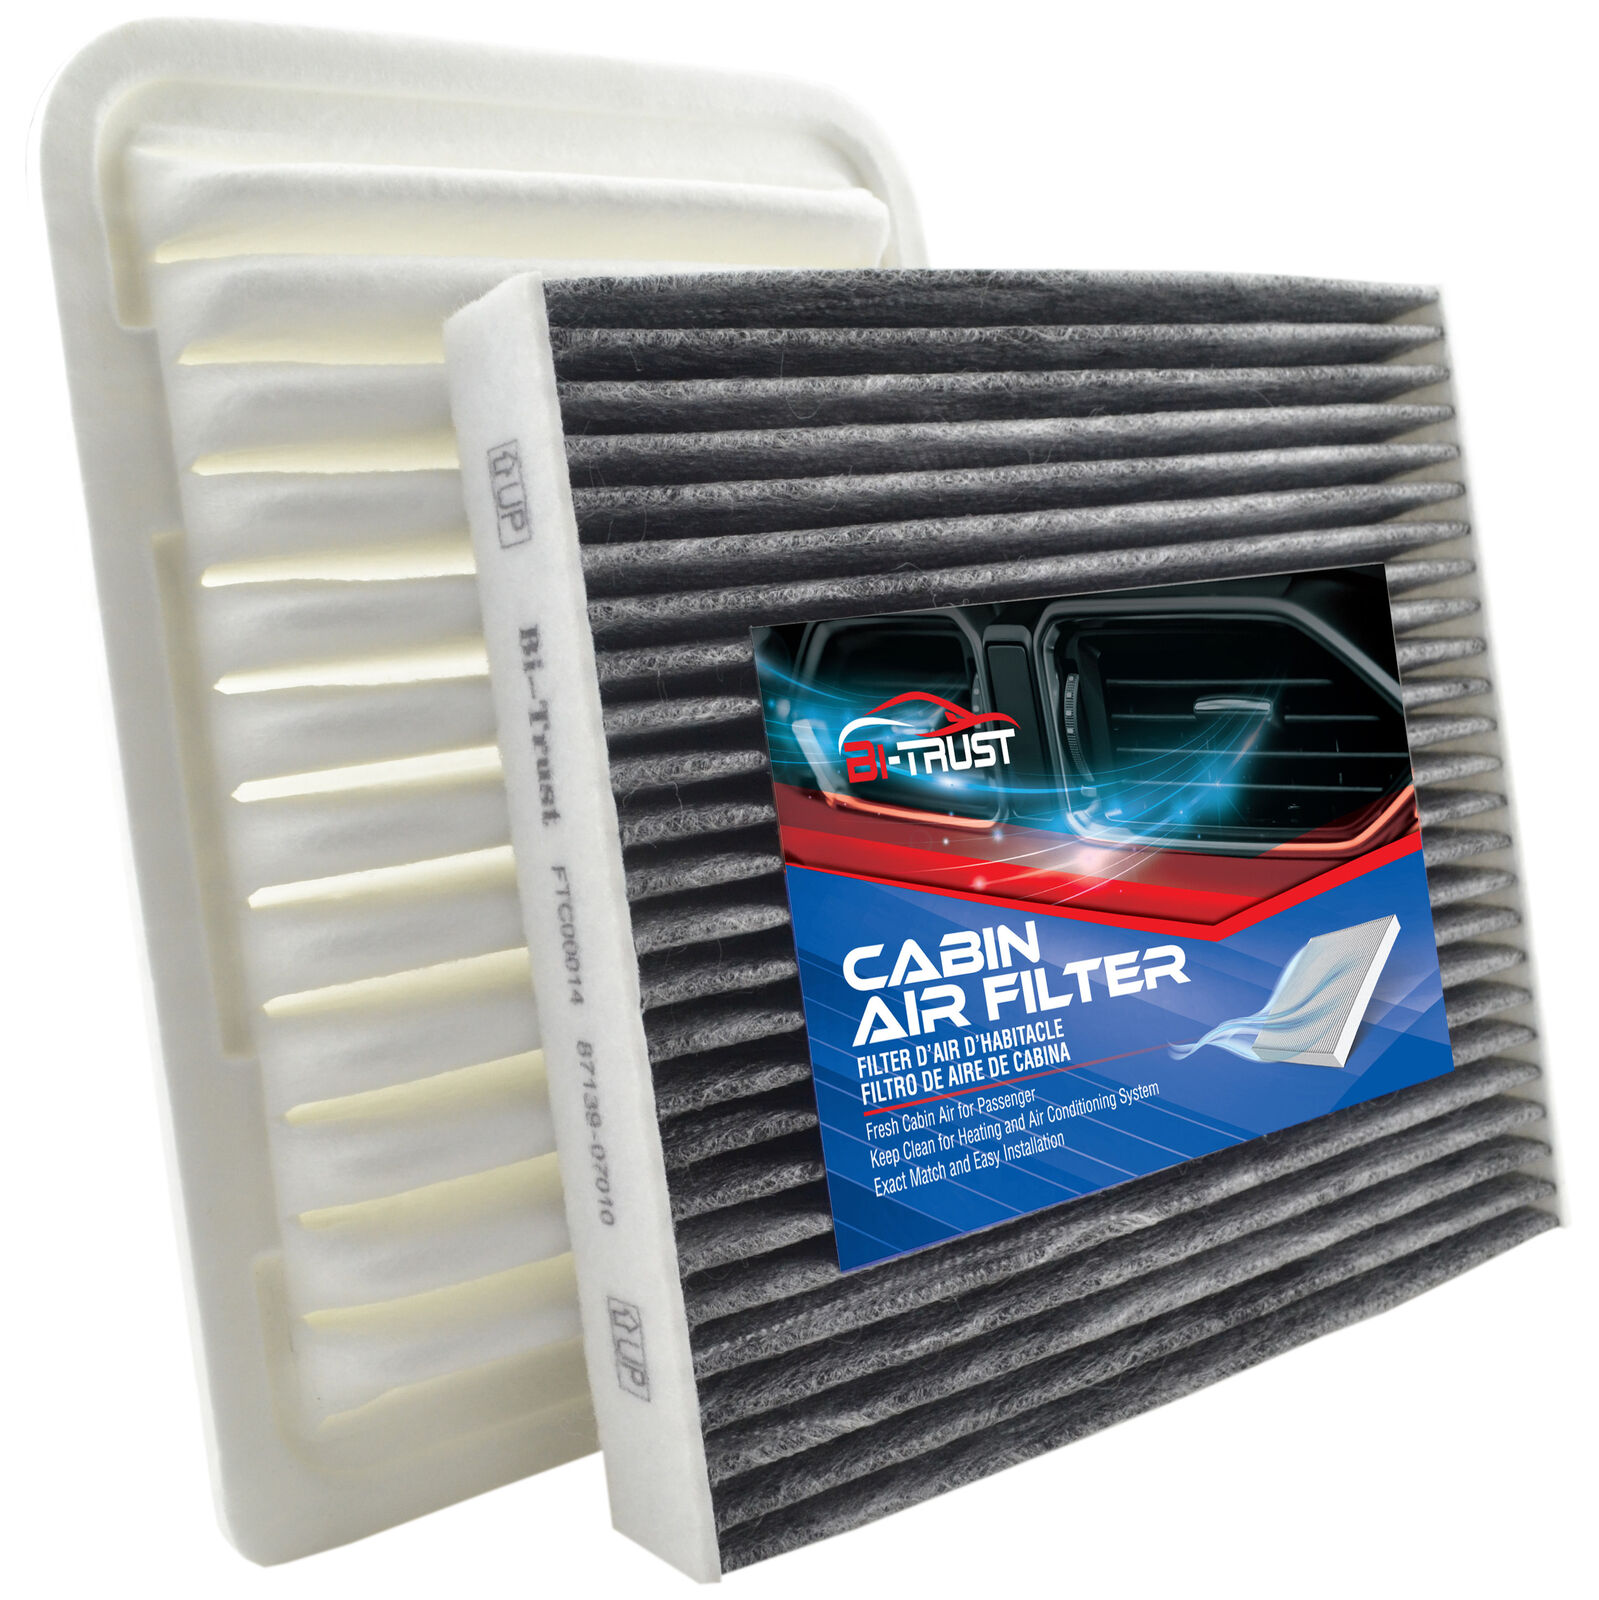 Engine and Cabin Air Filter Kit for Toyota Corolla Matrix Yaris Pontiac Vibe